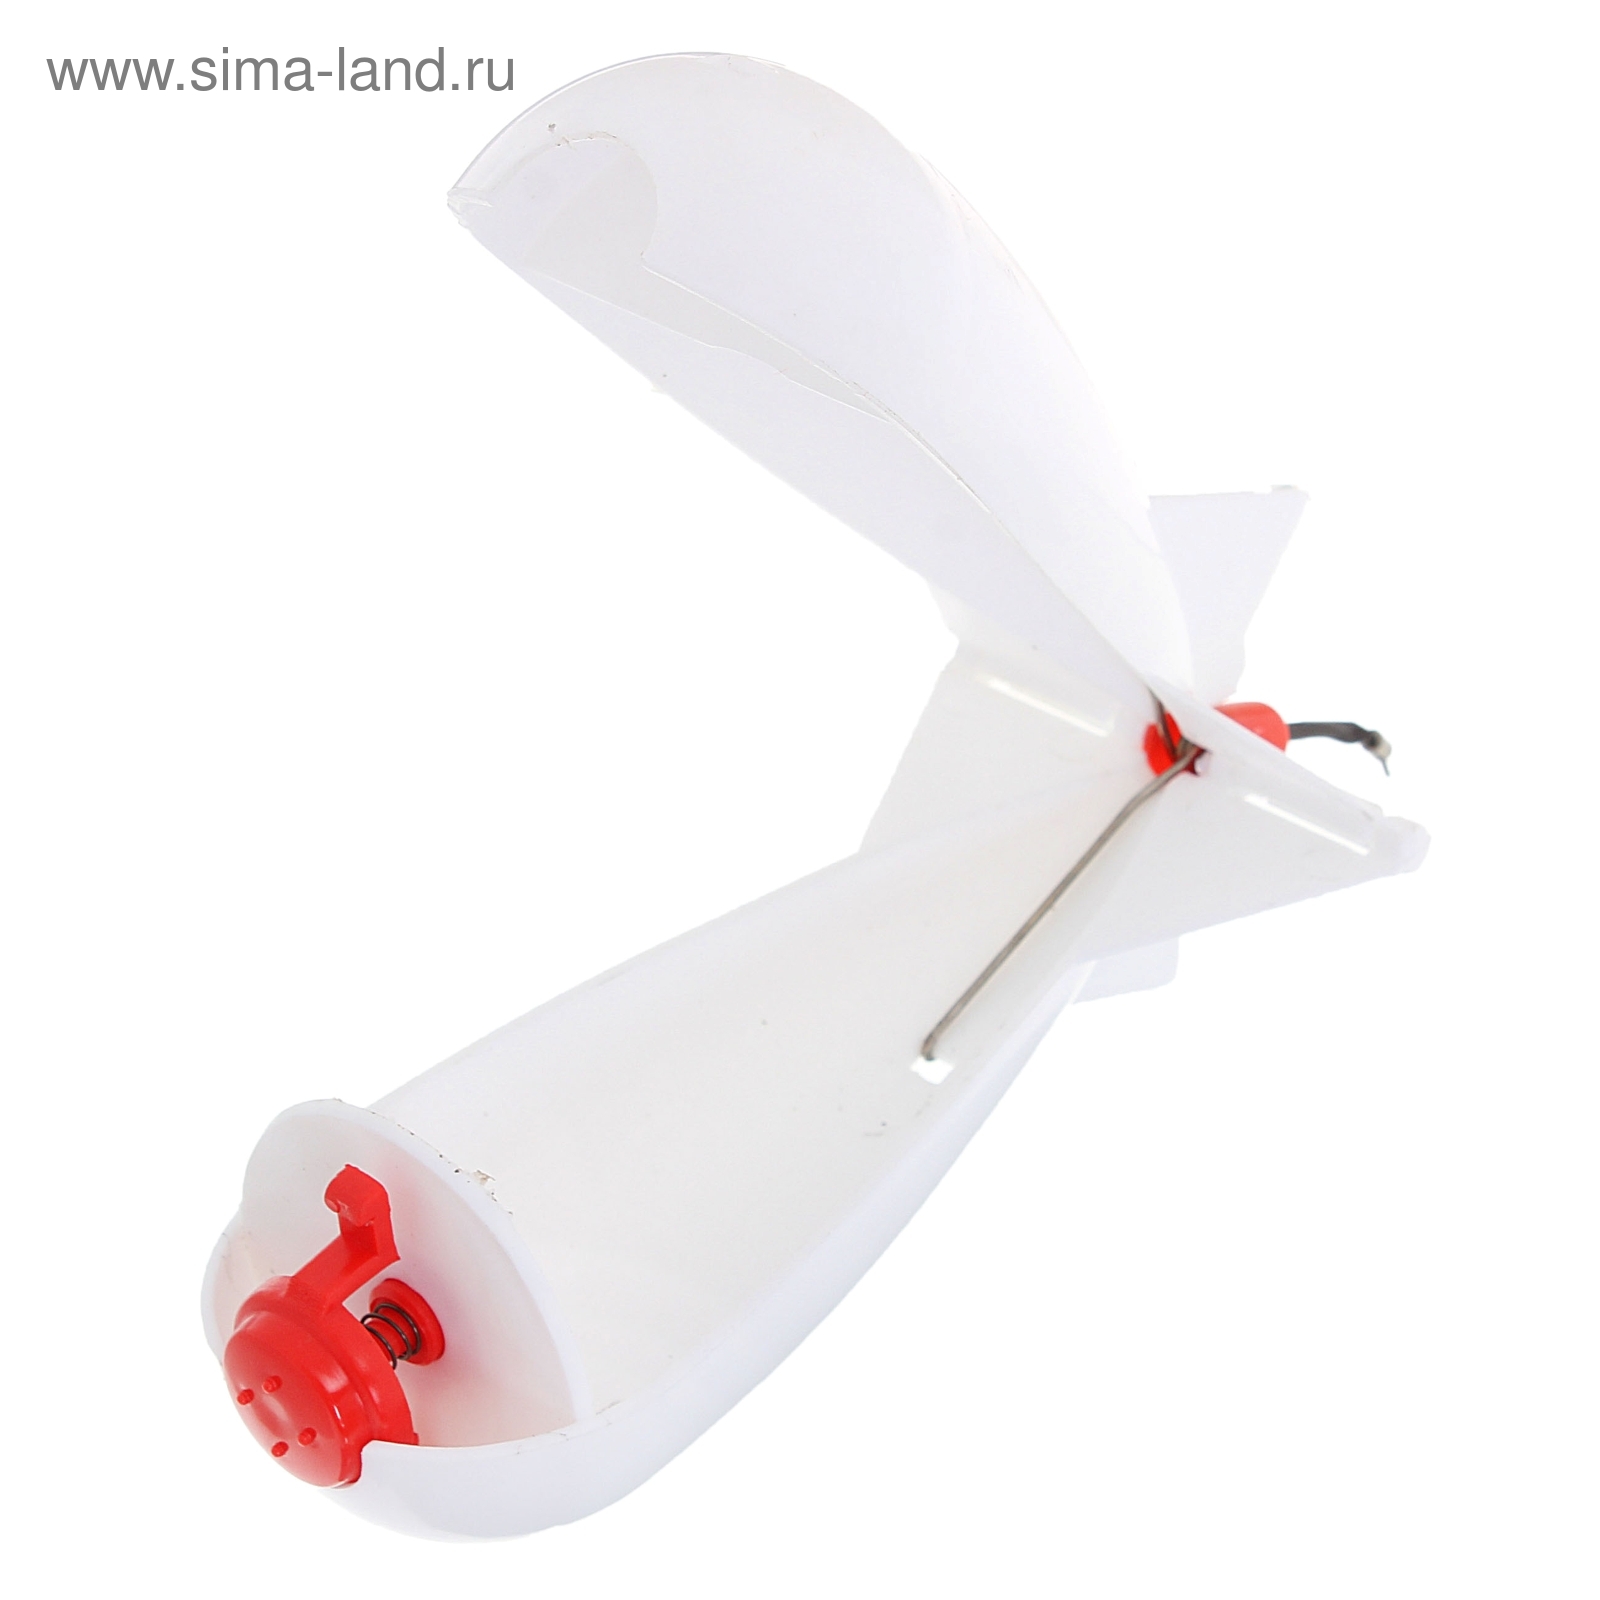 Закормочная ракета Spomb white mini